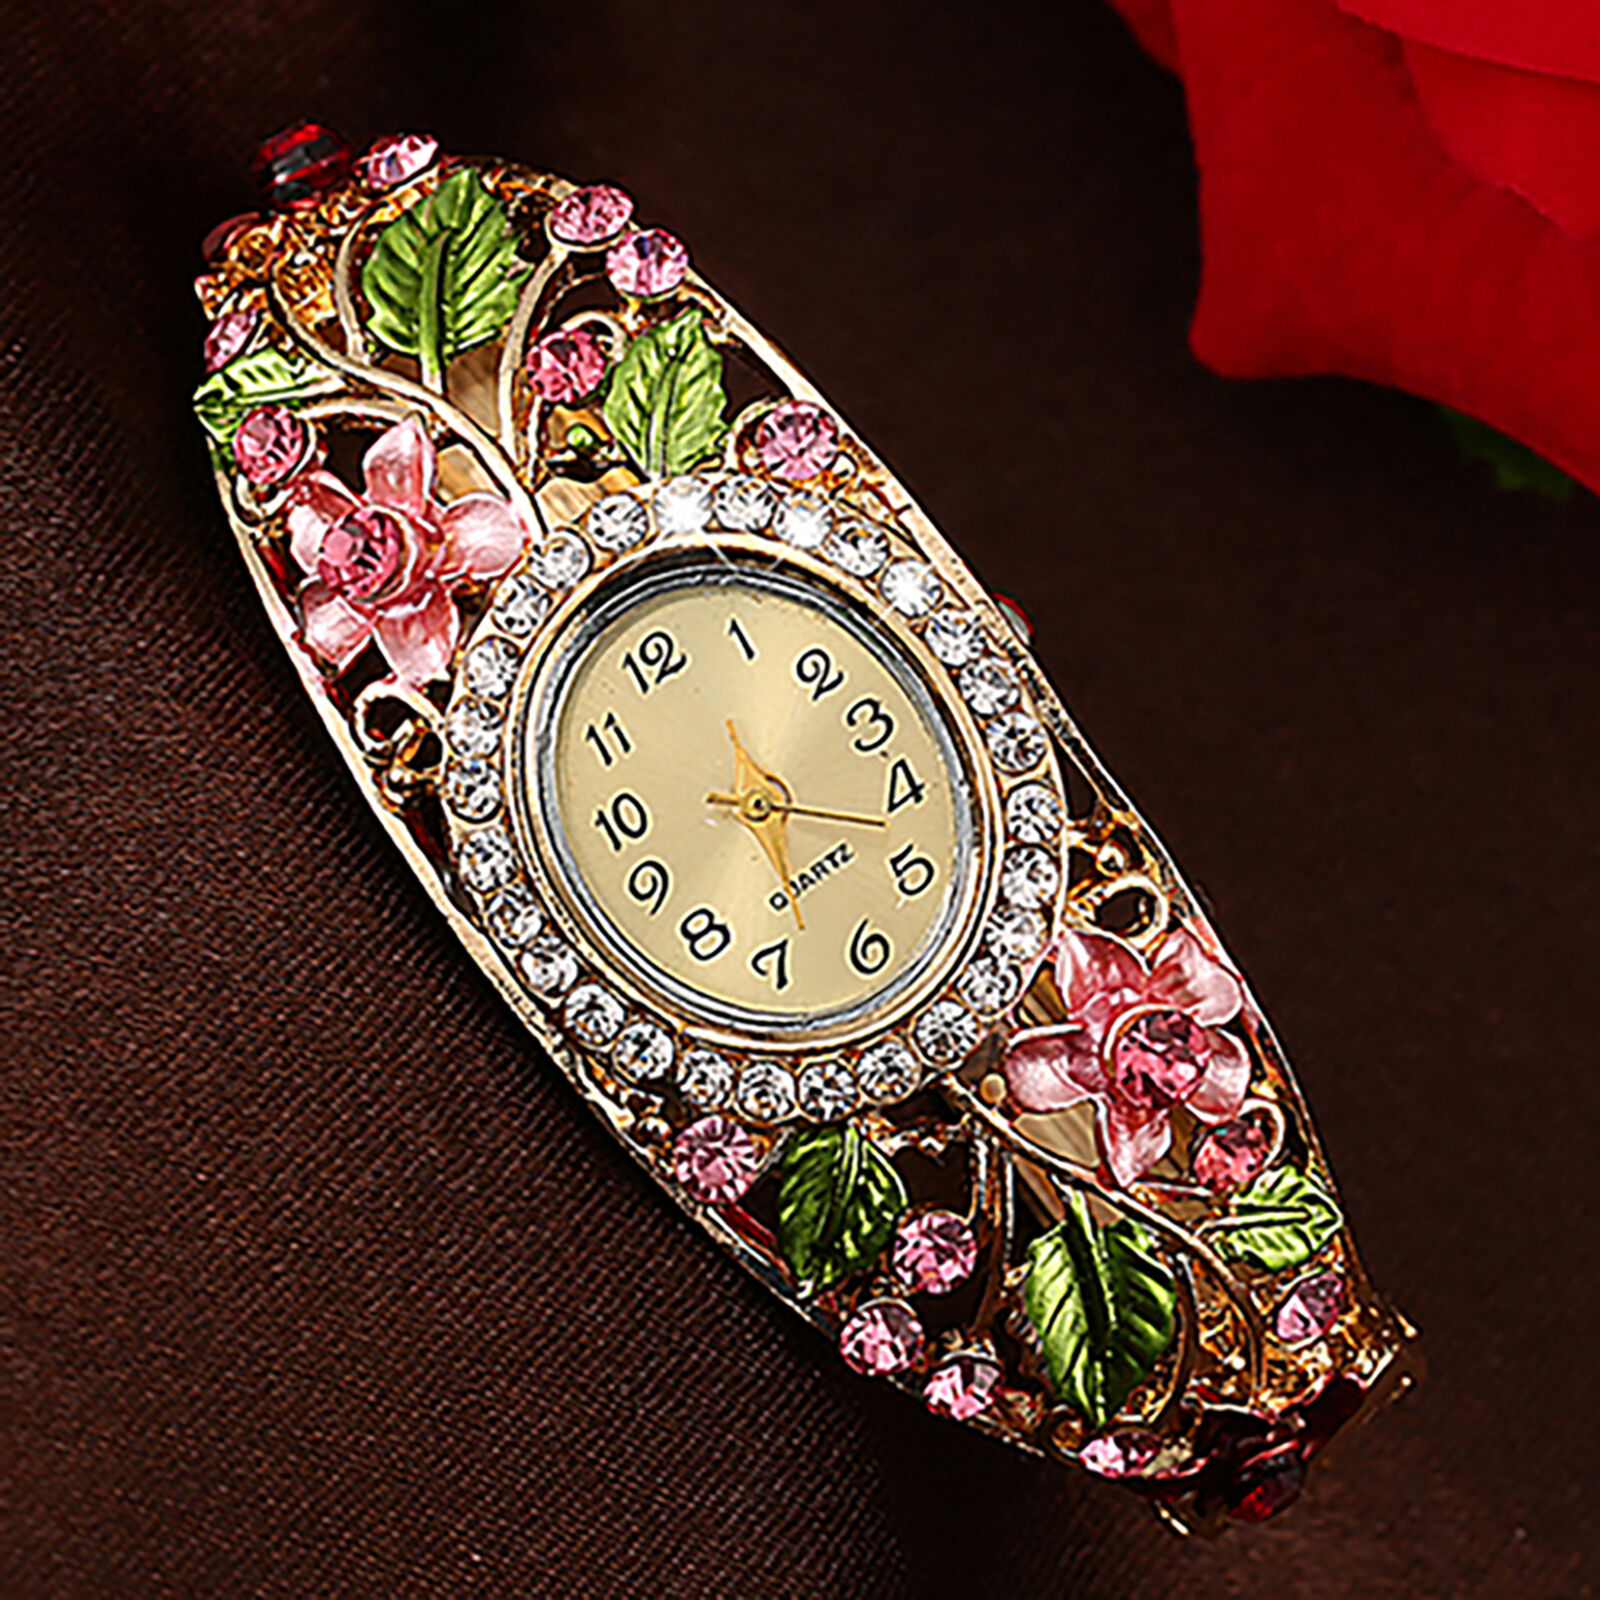 Bracelet Wrist Watch Vintage Hard Strap Ladies Bangle Dress Watch Alloy Unbranded